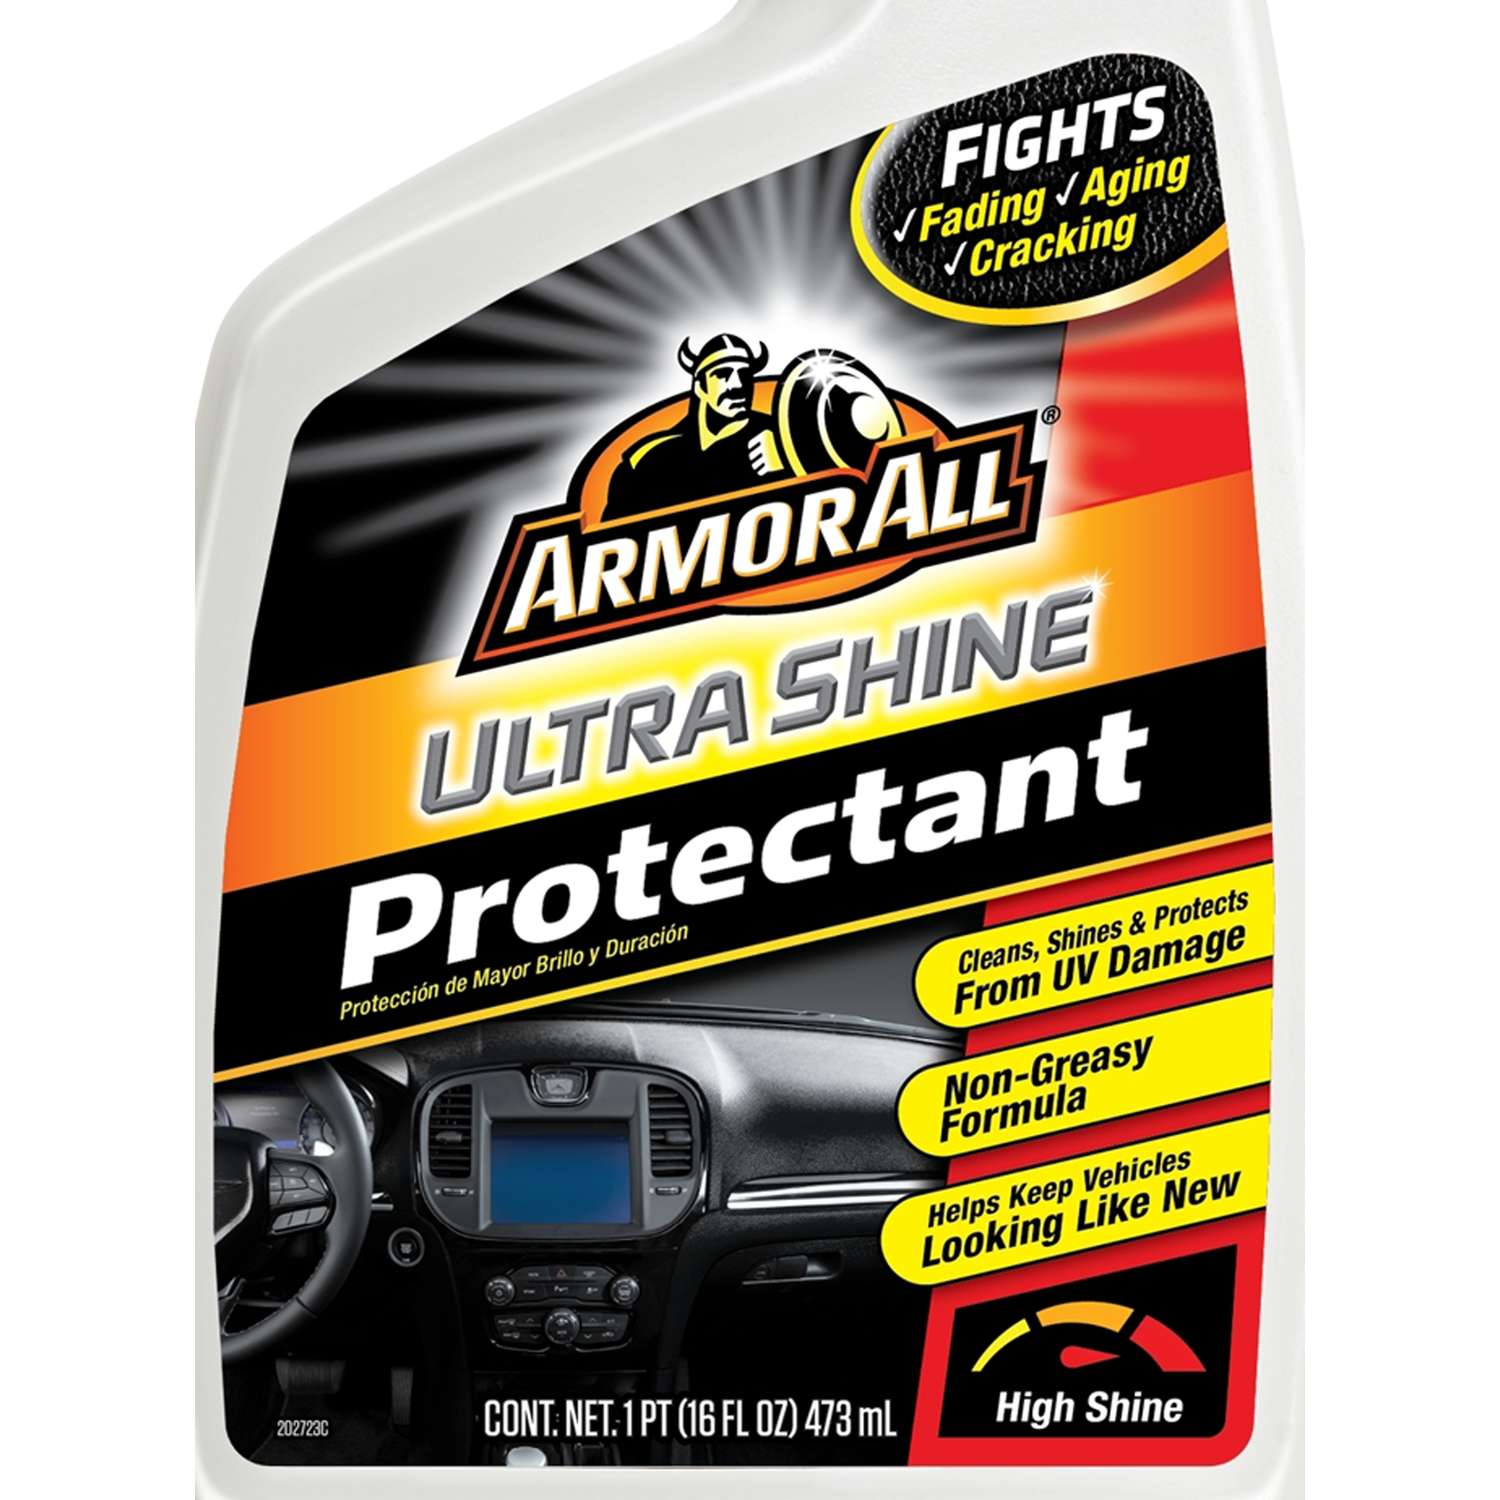 Armor All Ultra High Shine Protectant 500ml - E301738100 - Armor All